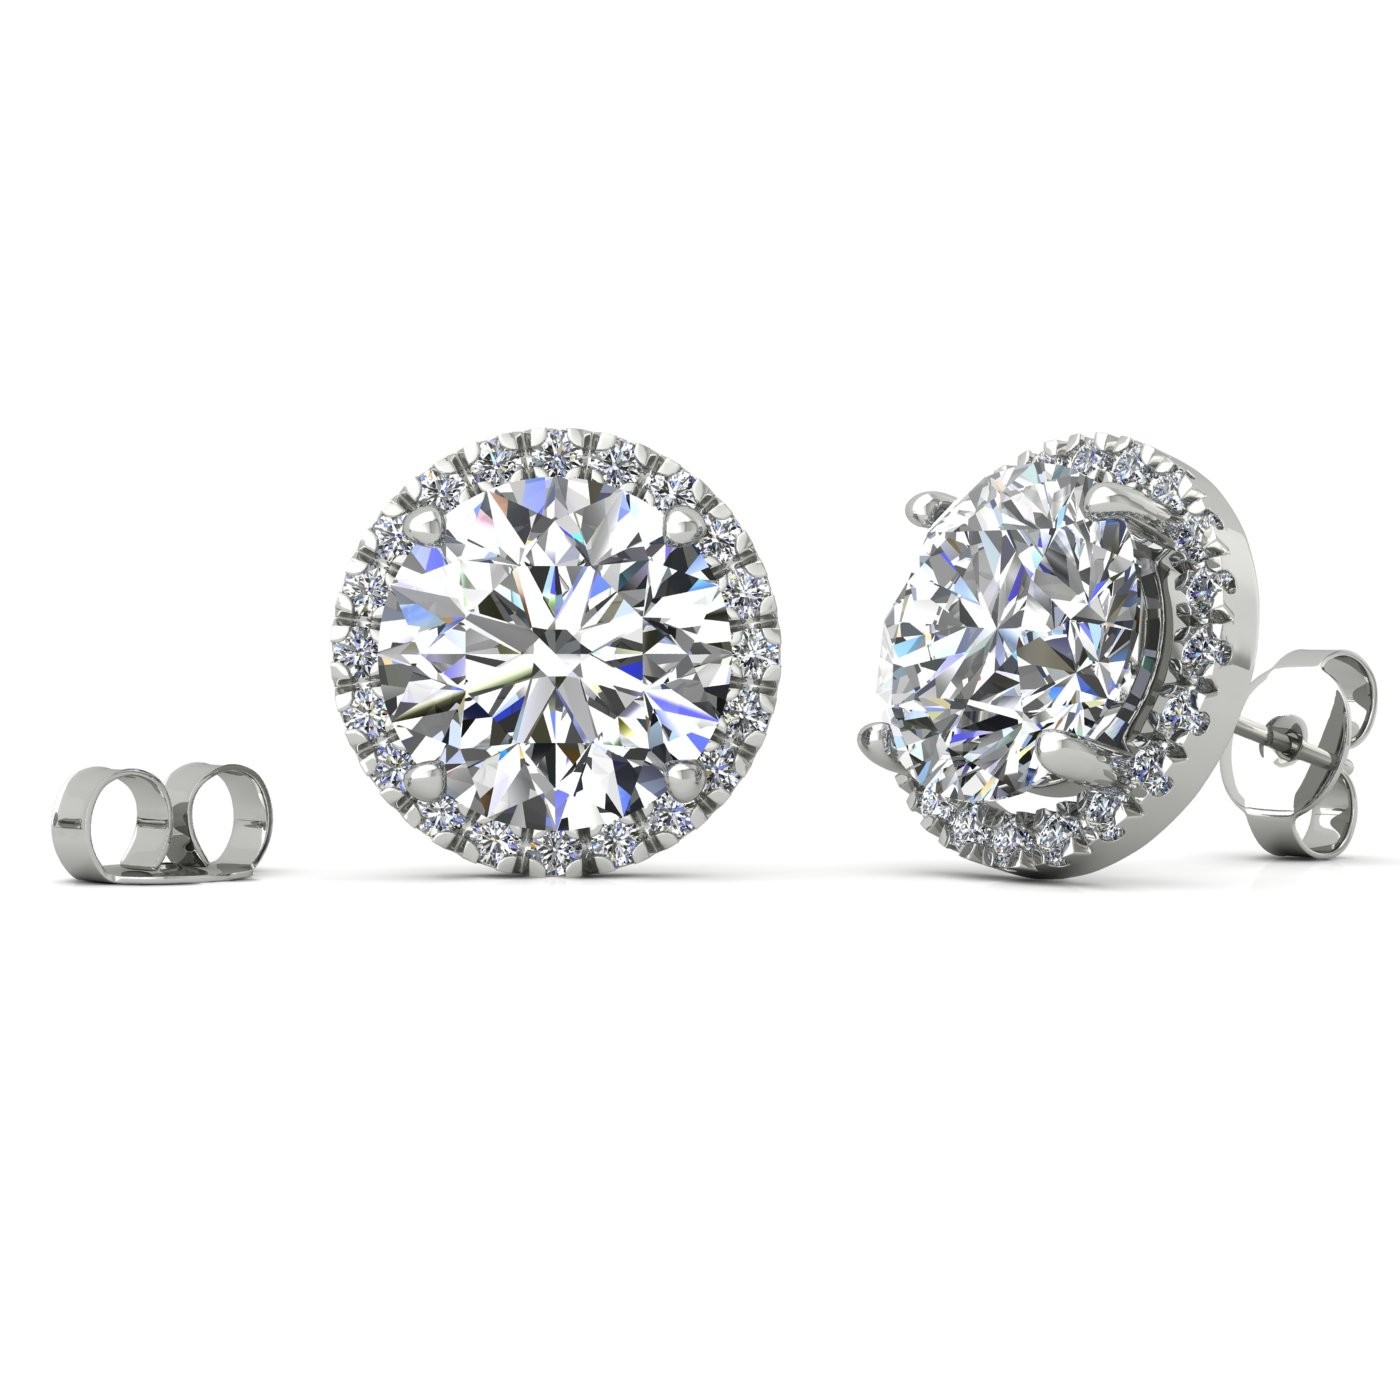 18k white gold  0,3 ct each (0,6 tcw) 4 prongs round shape diamond earrings with diamond pavÉ set halo Photos & images